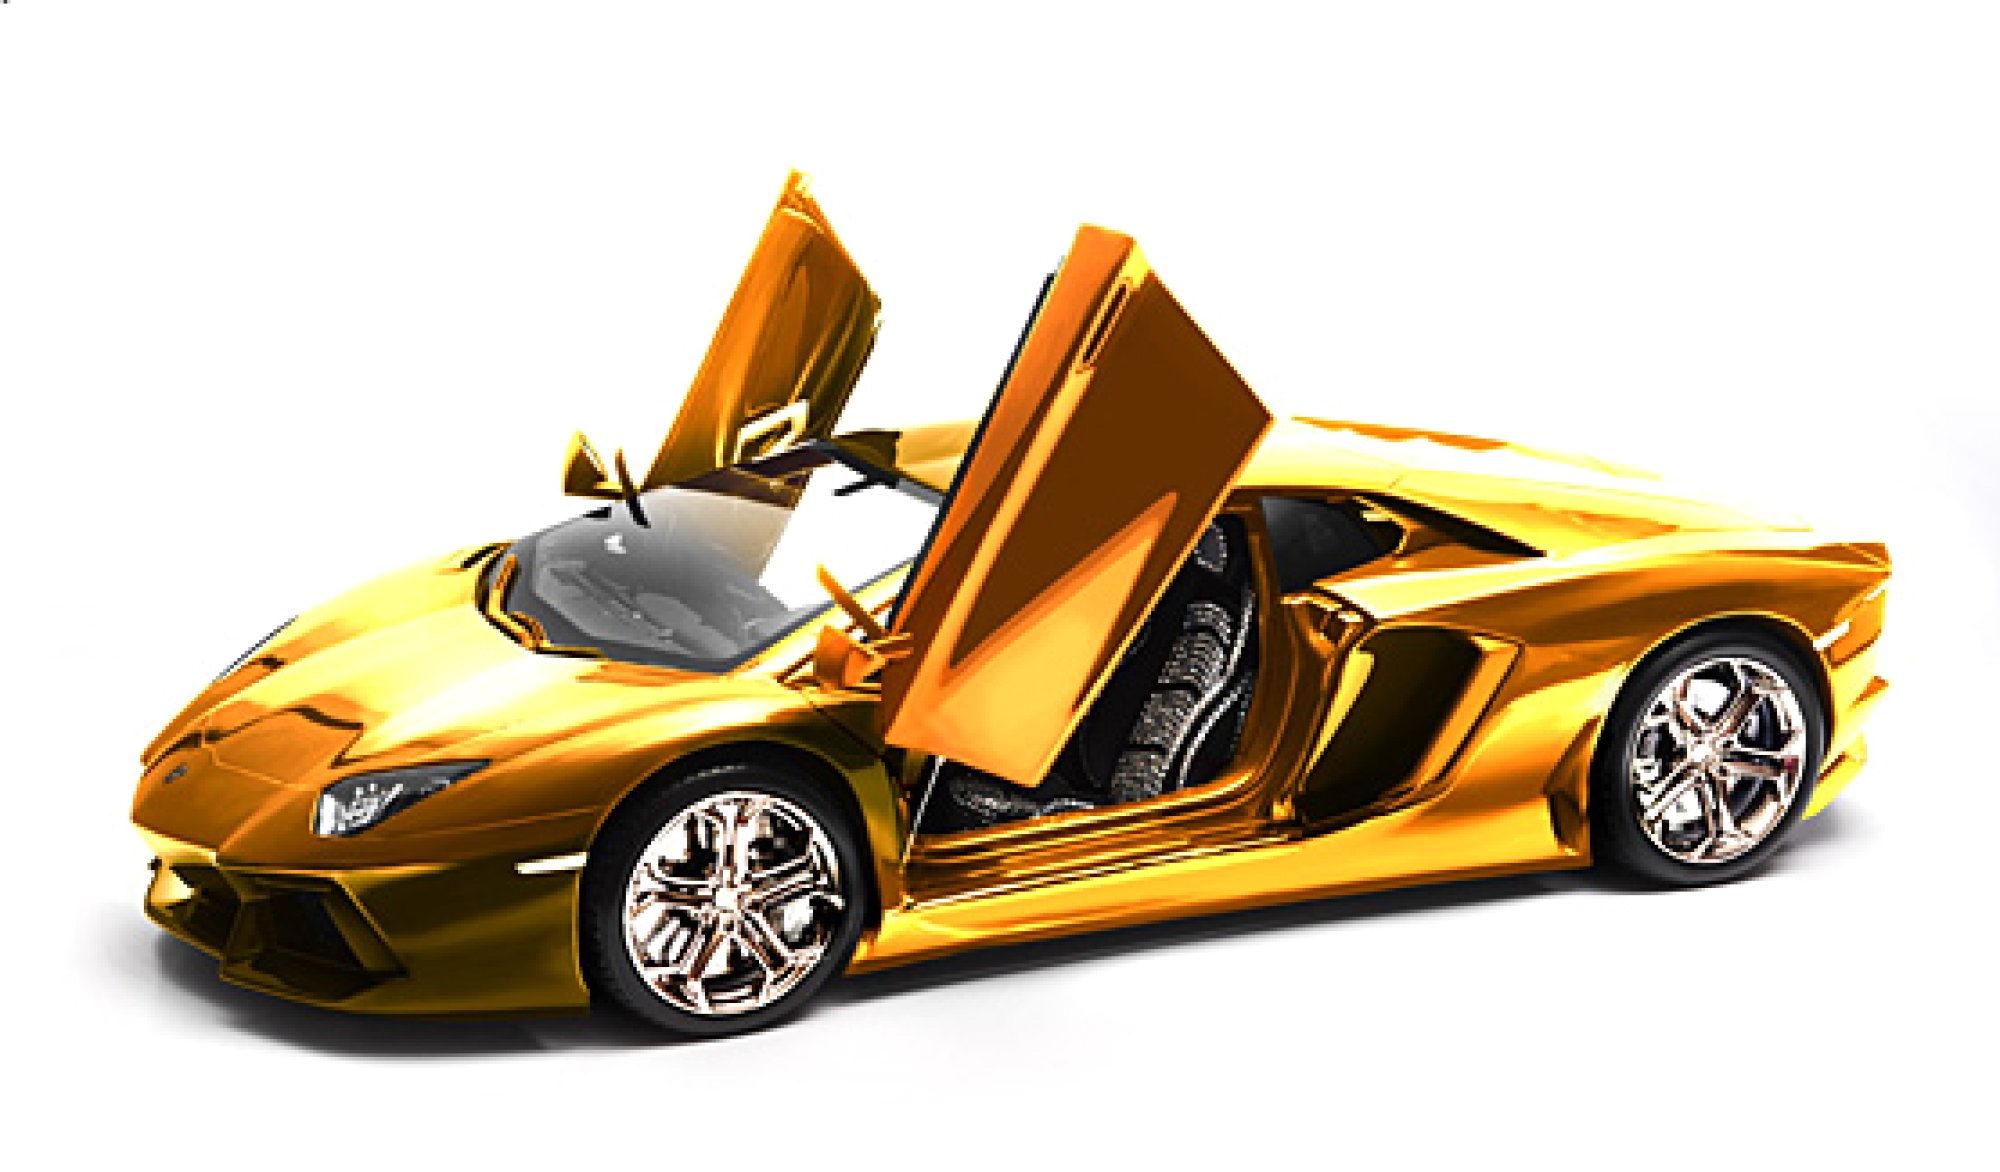 Gold Lamborghini Car Wallpaper Download. Car Picture Website